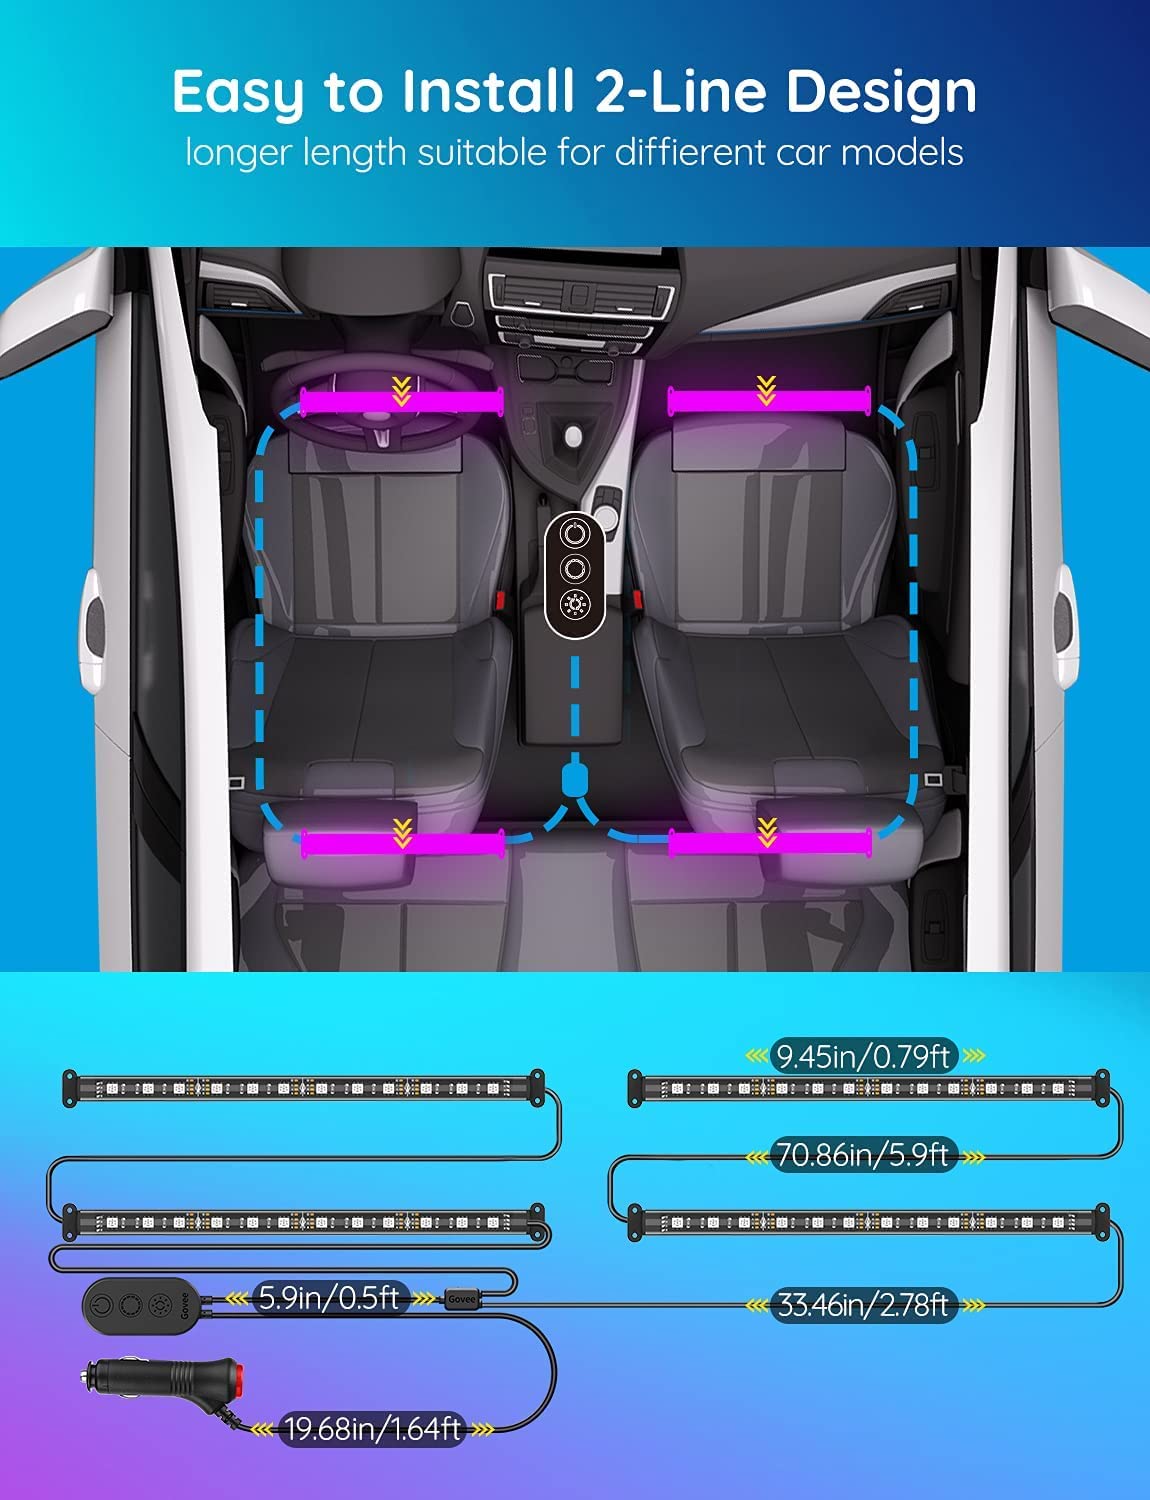 LED lights, smart car interior lighting with APP control 